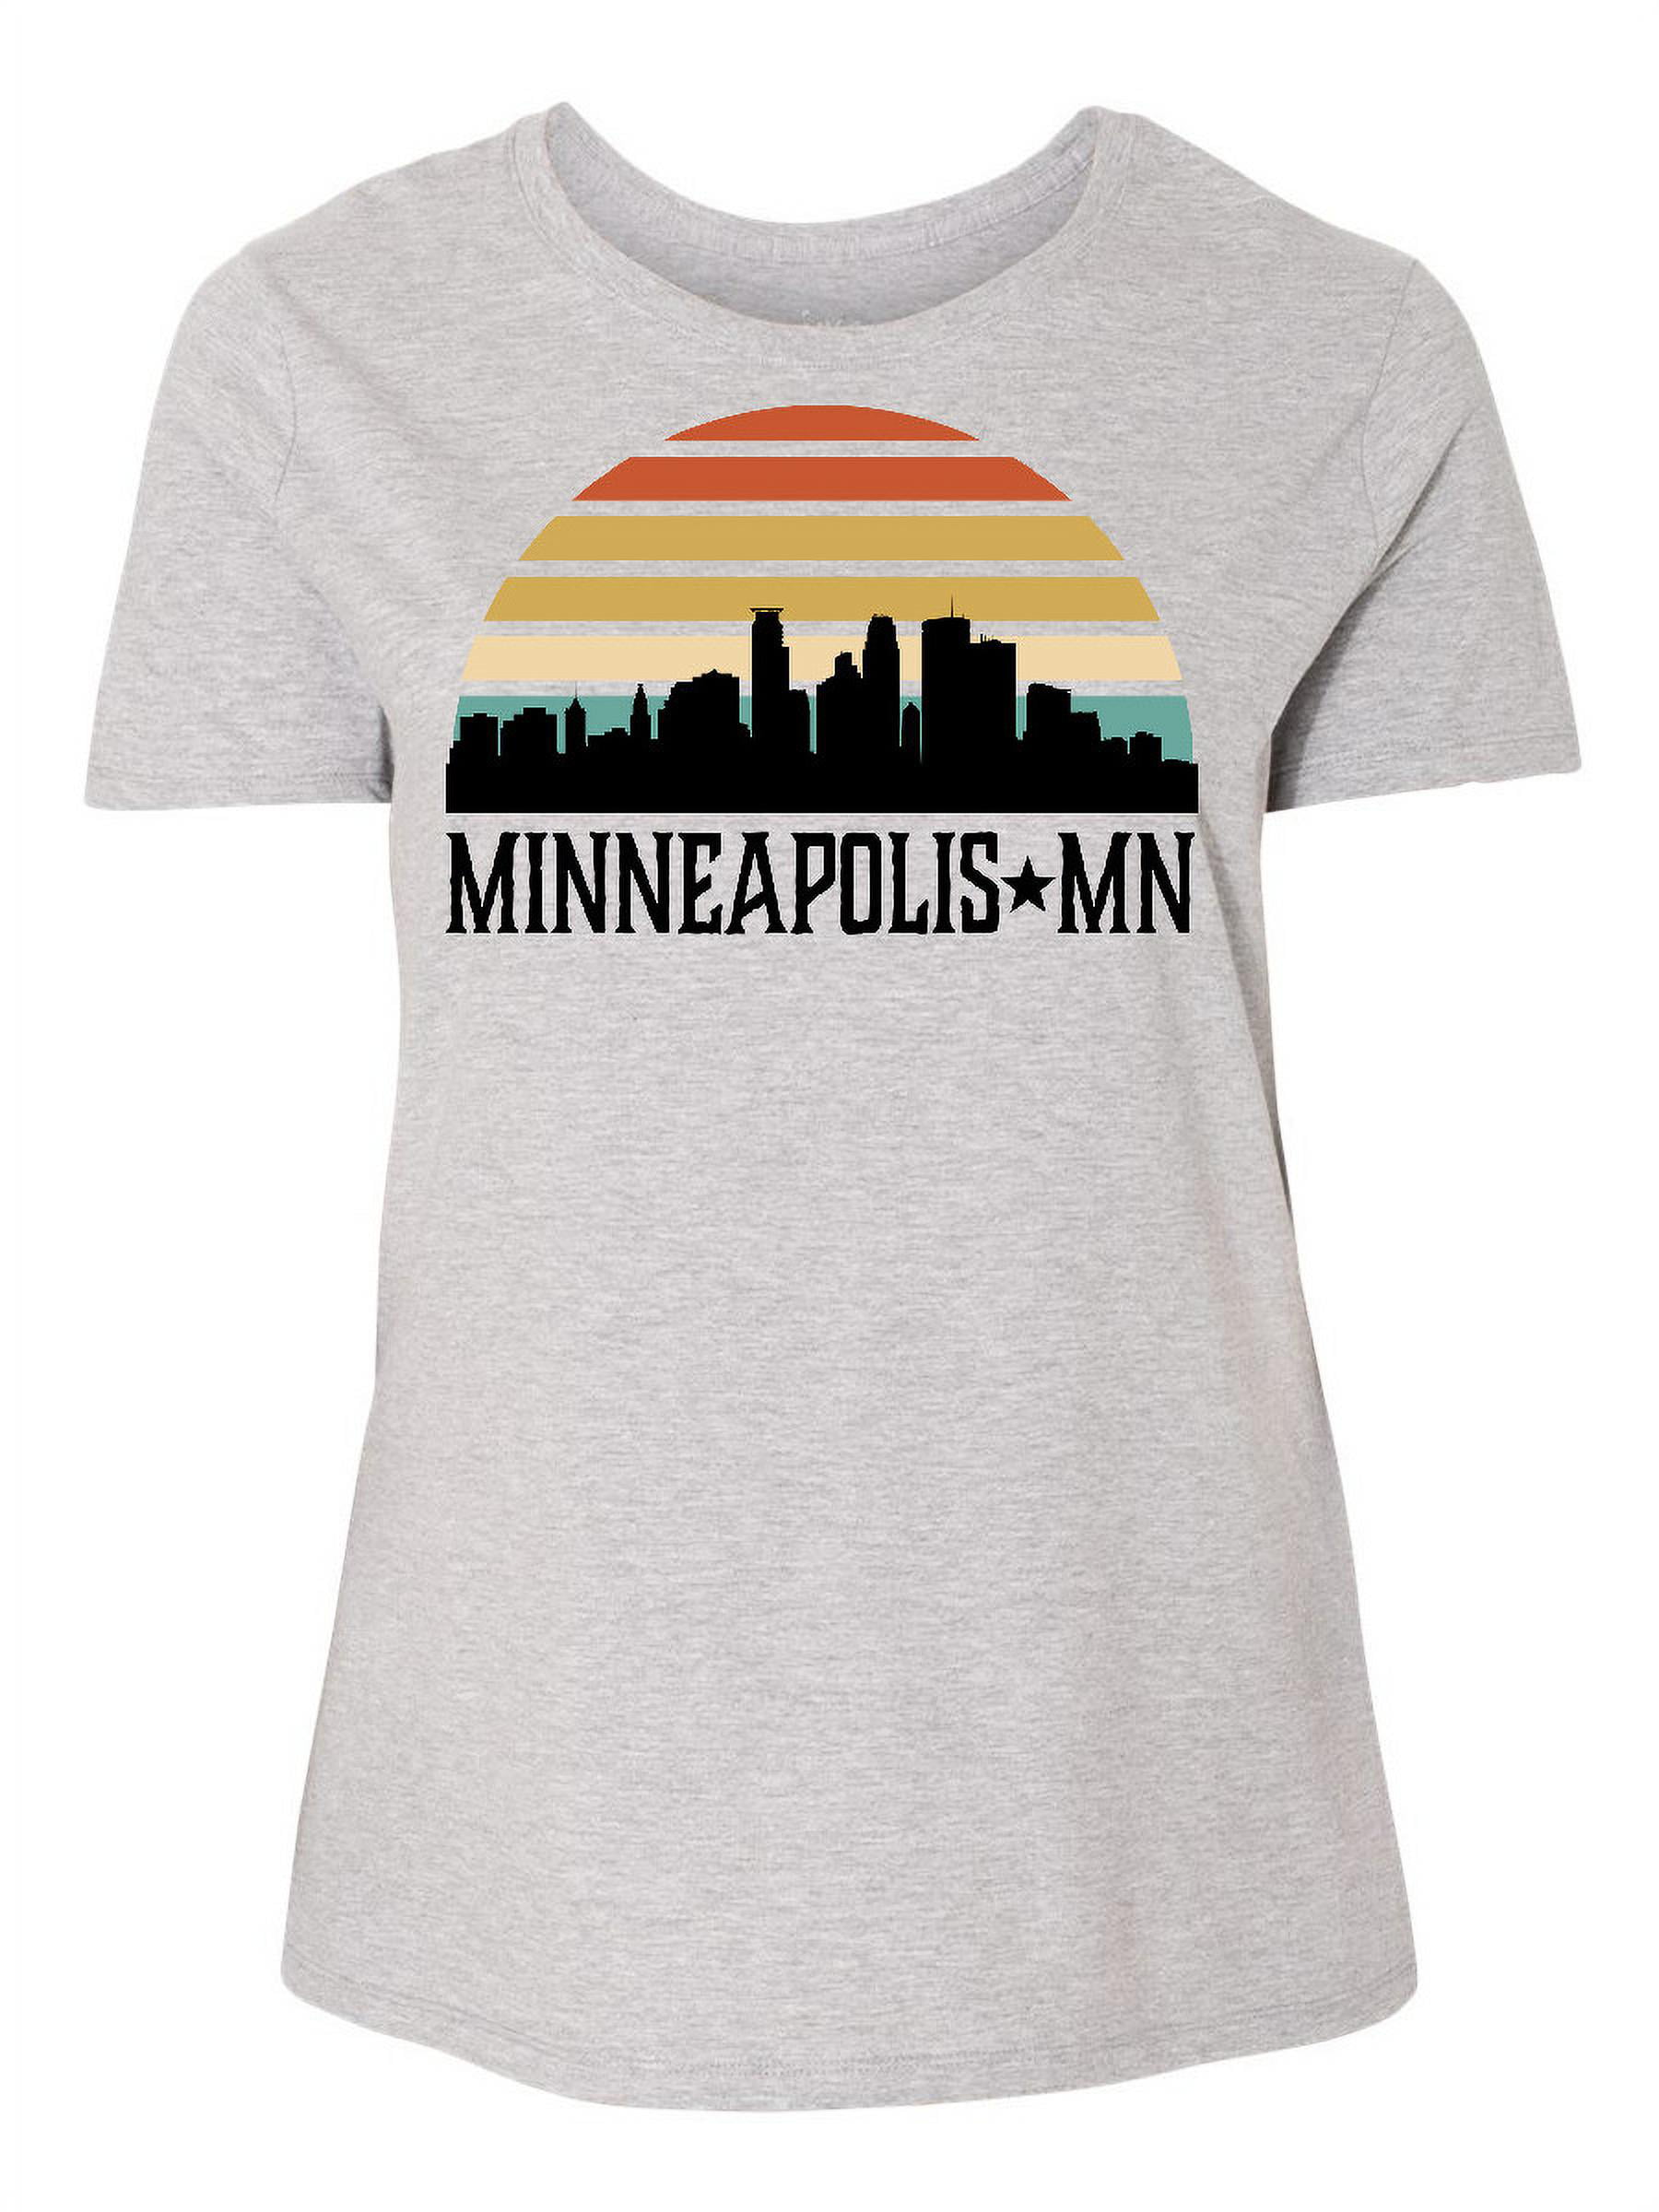 Minneapolis Minnesota City Skyline Silhouette Mens Tee Shirt Pick Size Color 